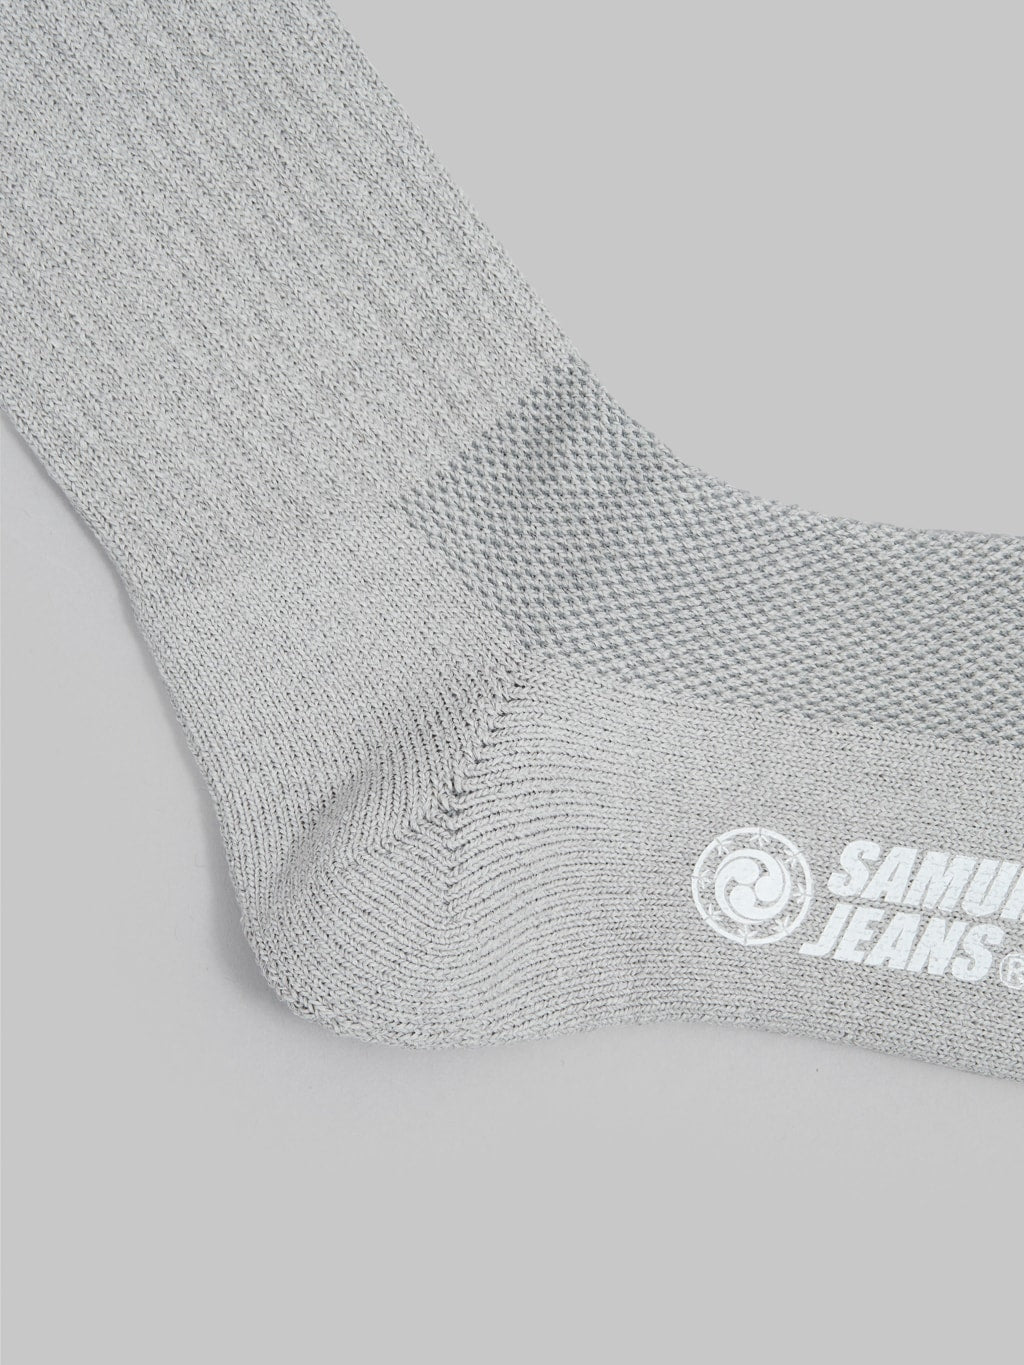 Samurai Jeans SJKS24 Japanese "Washi Paper" Socks Grey